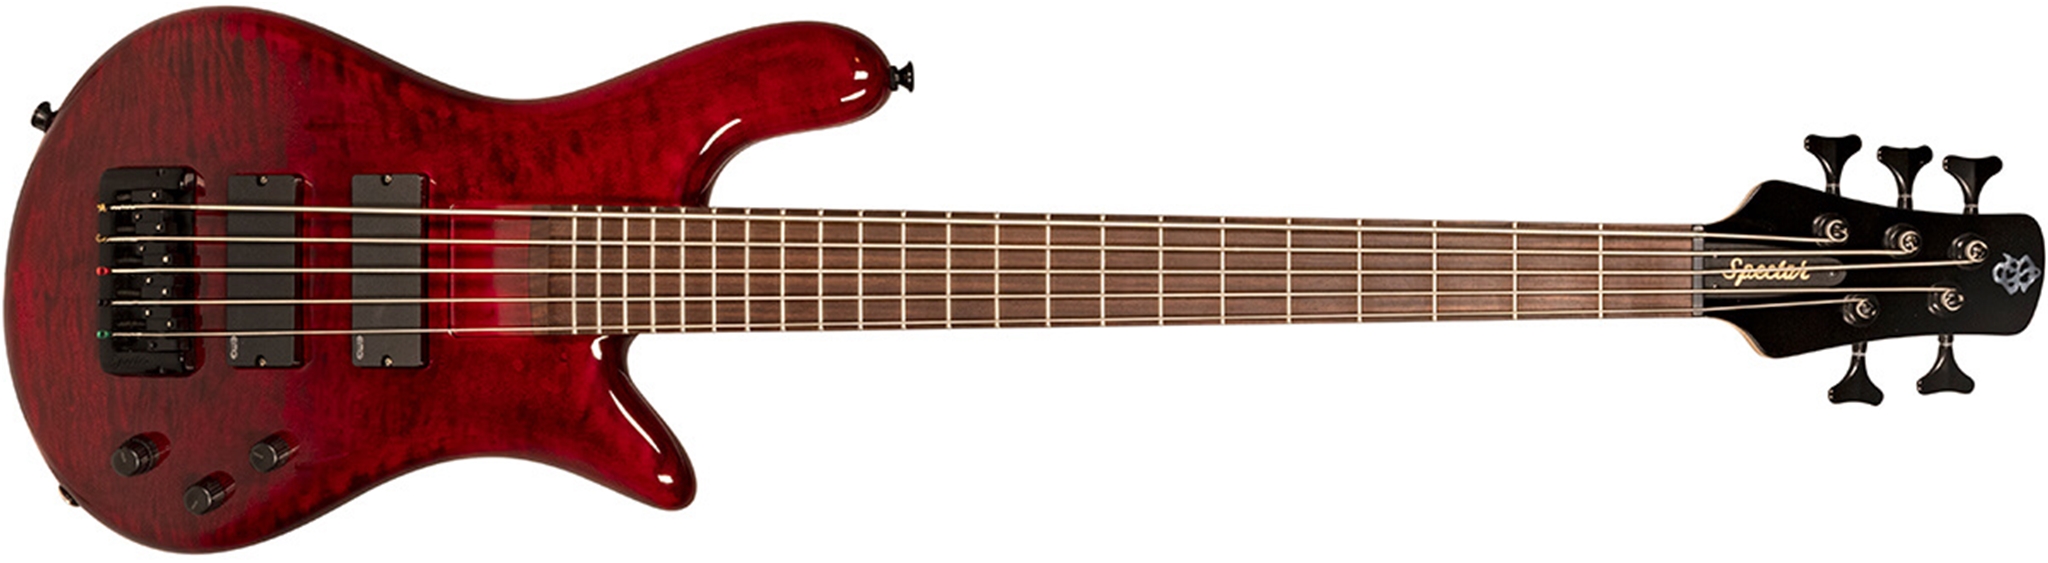 Spector Bantam 5 Black Cherry Gloss  32 inch  5-String Bass Guitar